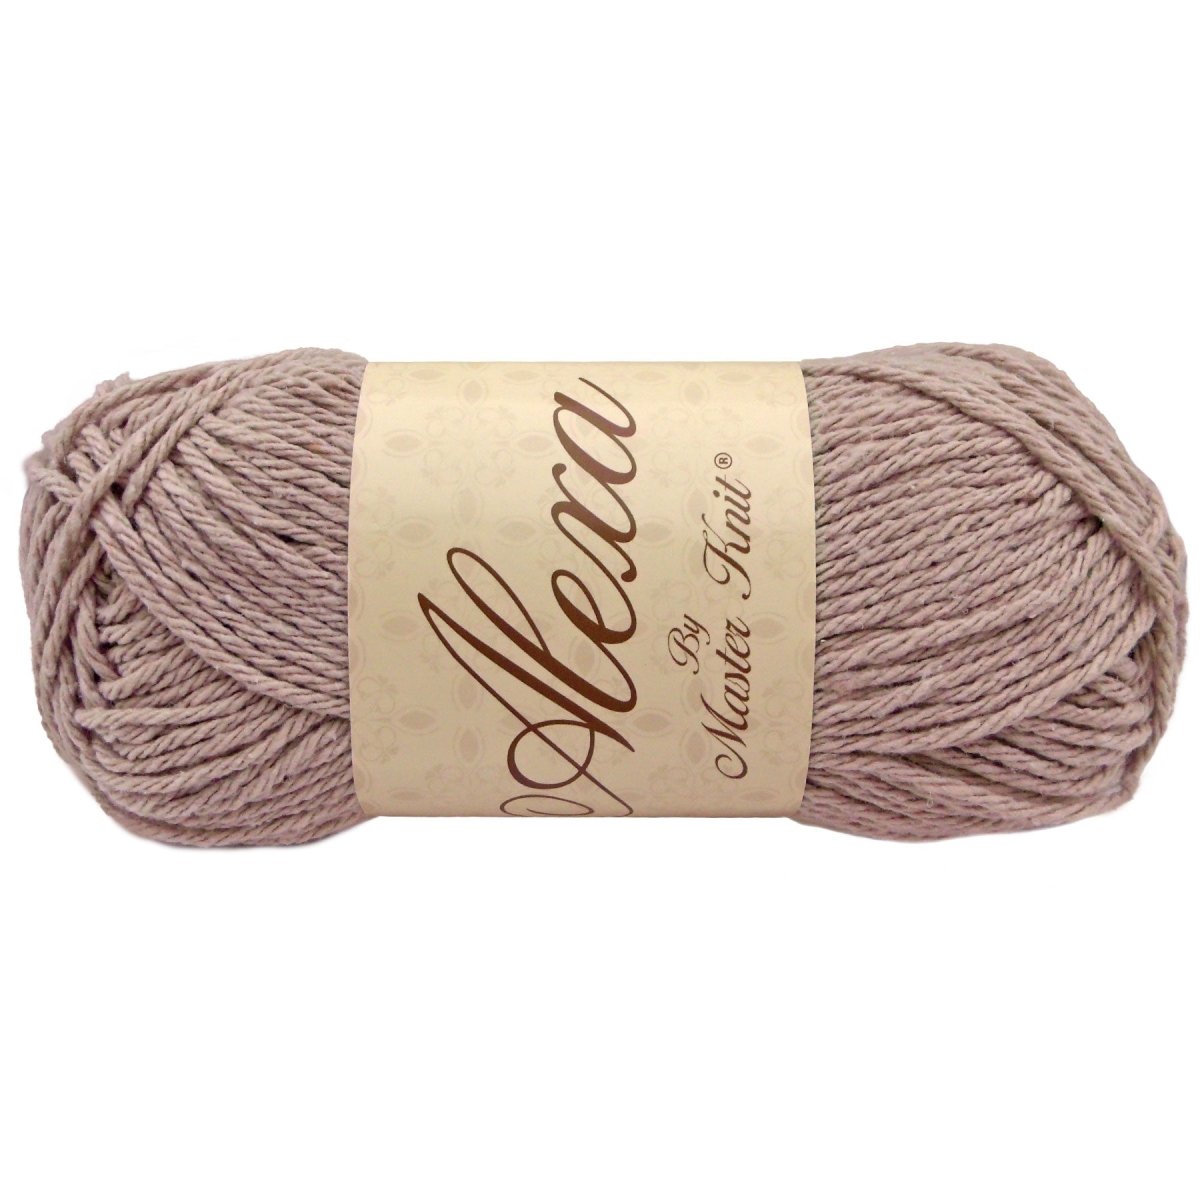 ALEXA - Crochetstores9340-886